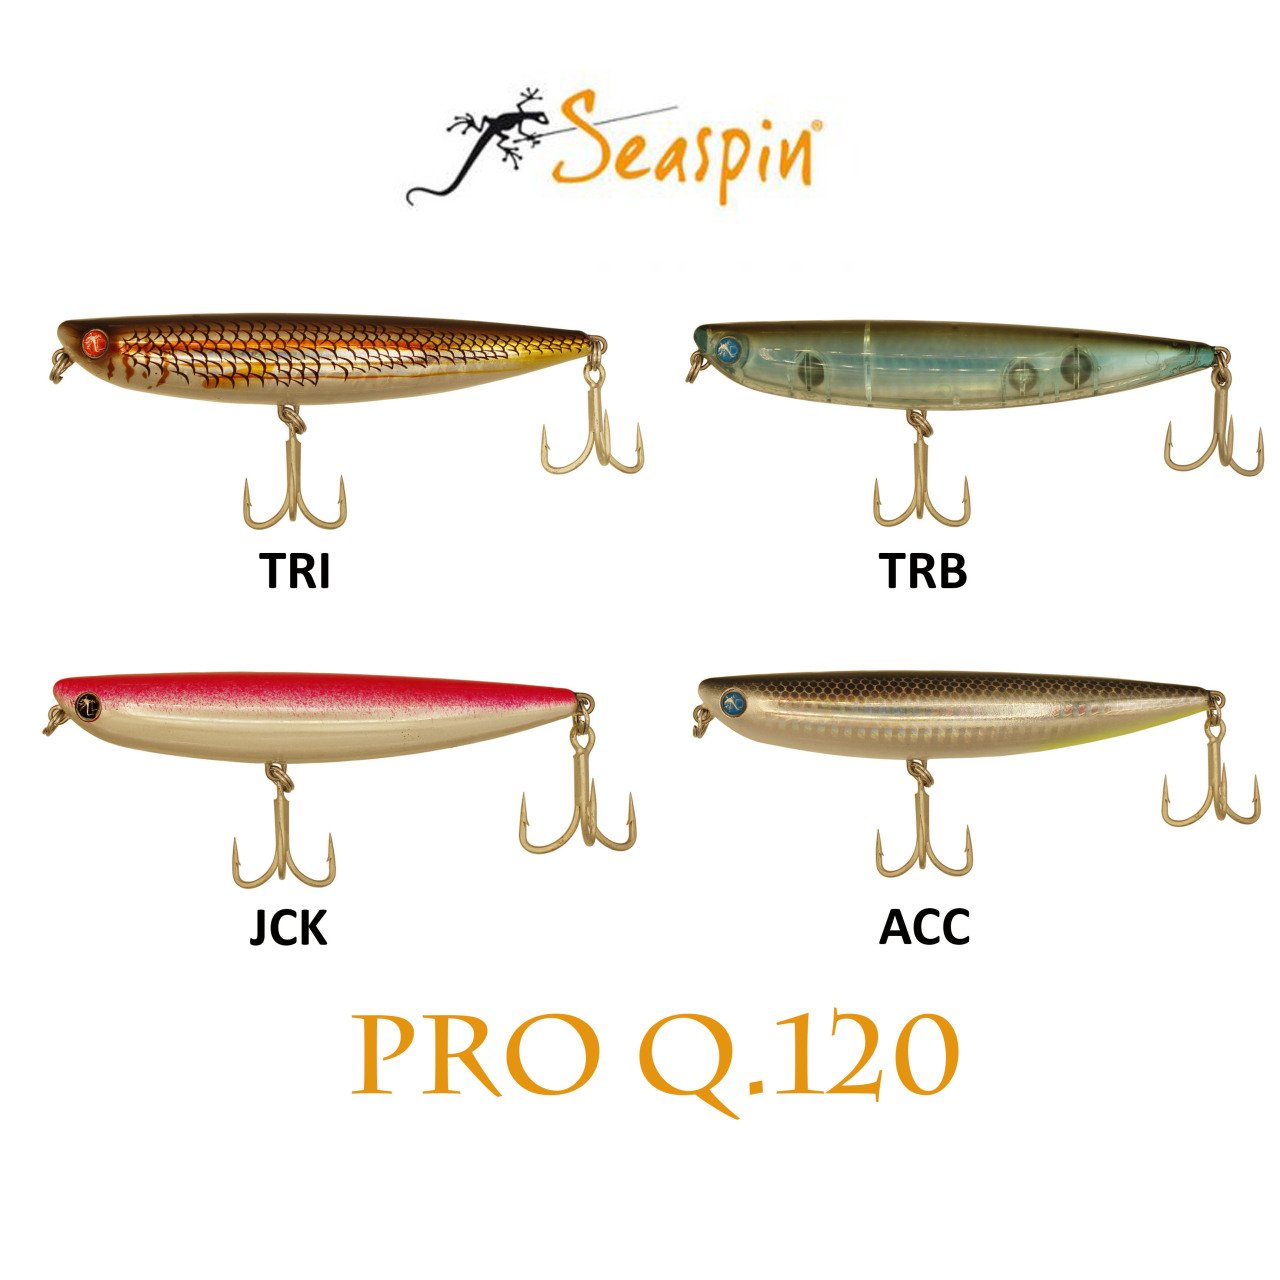 Seaspin Pro-Q 120 Maket Balık